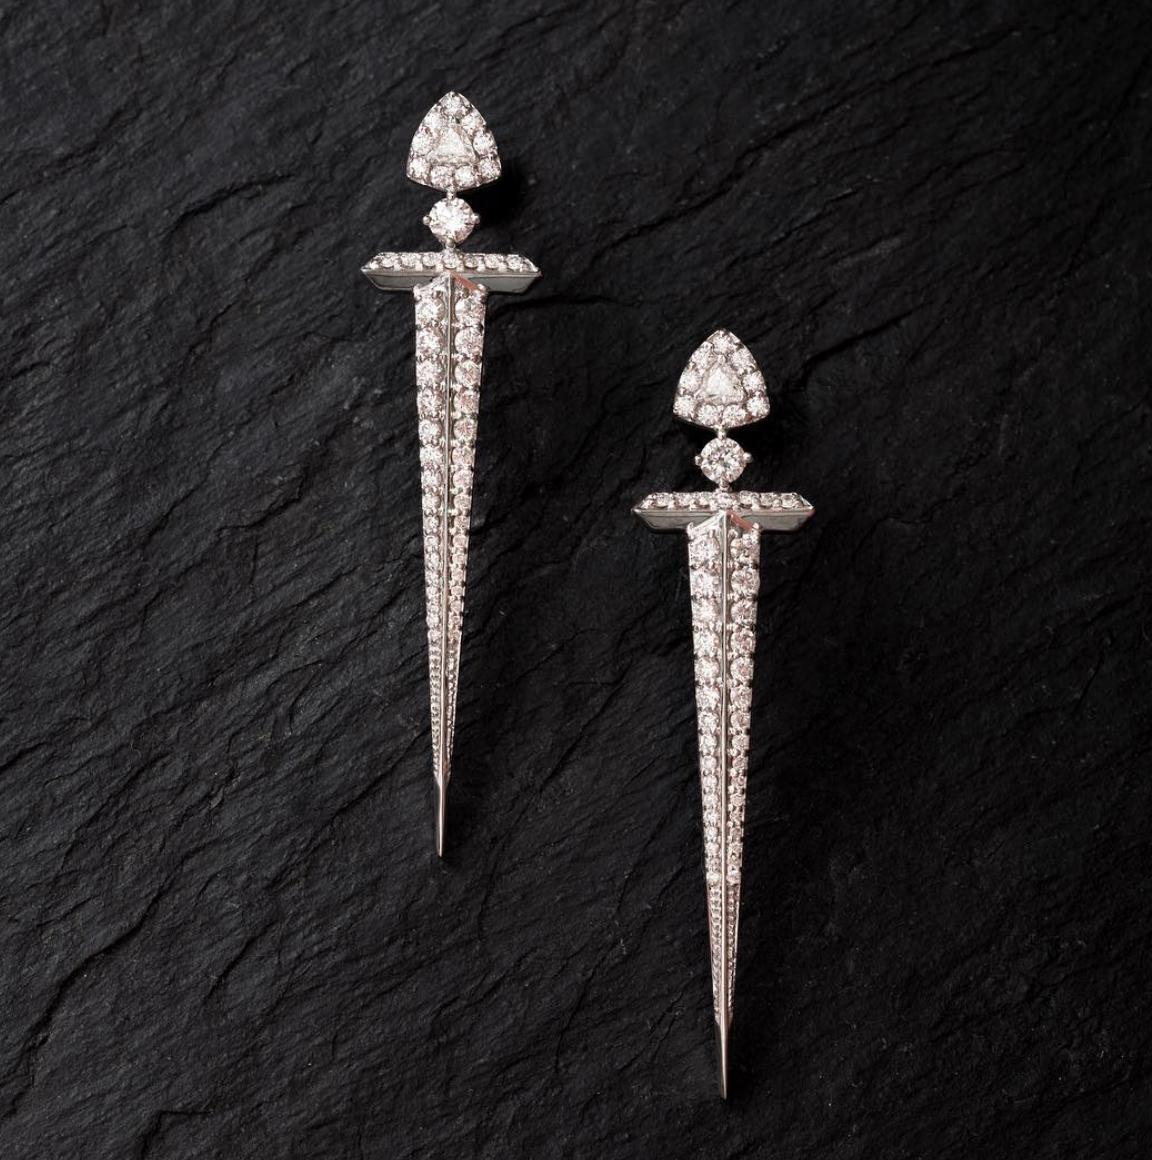 master sword earrings